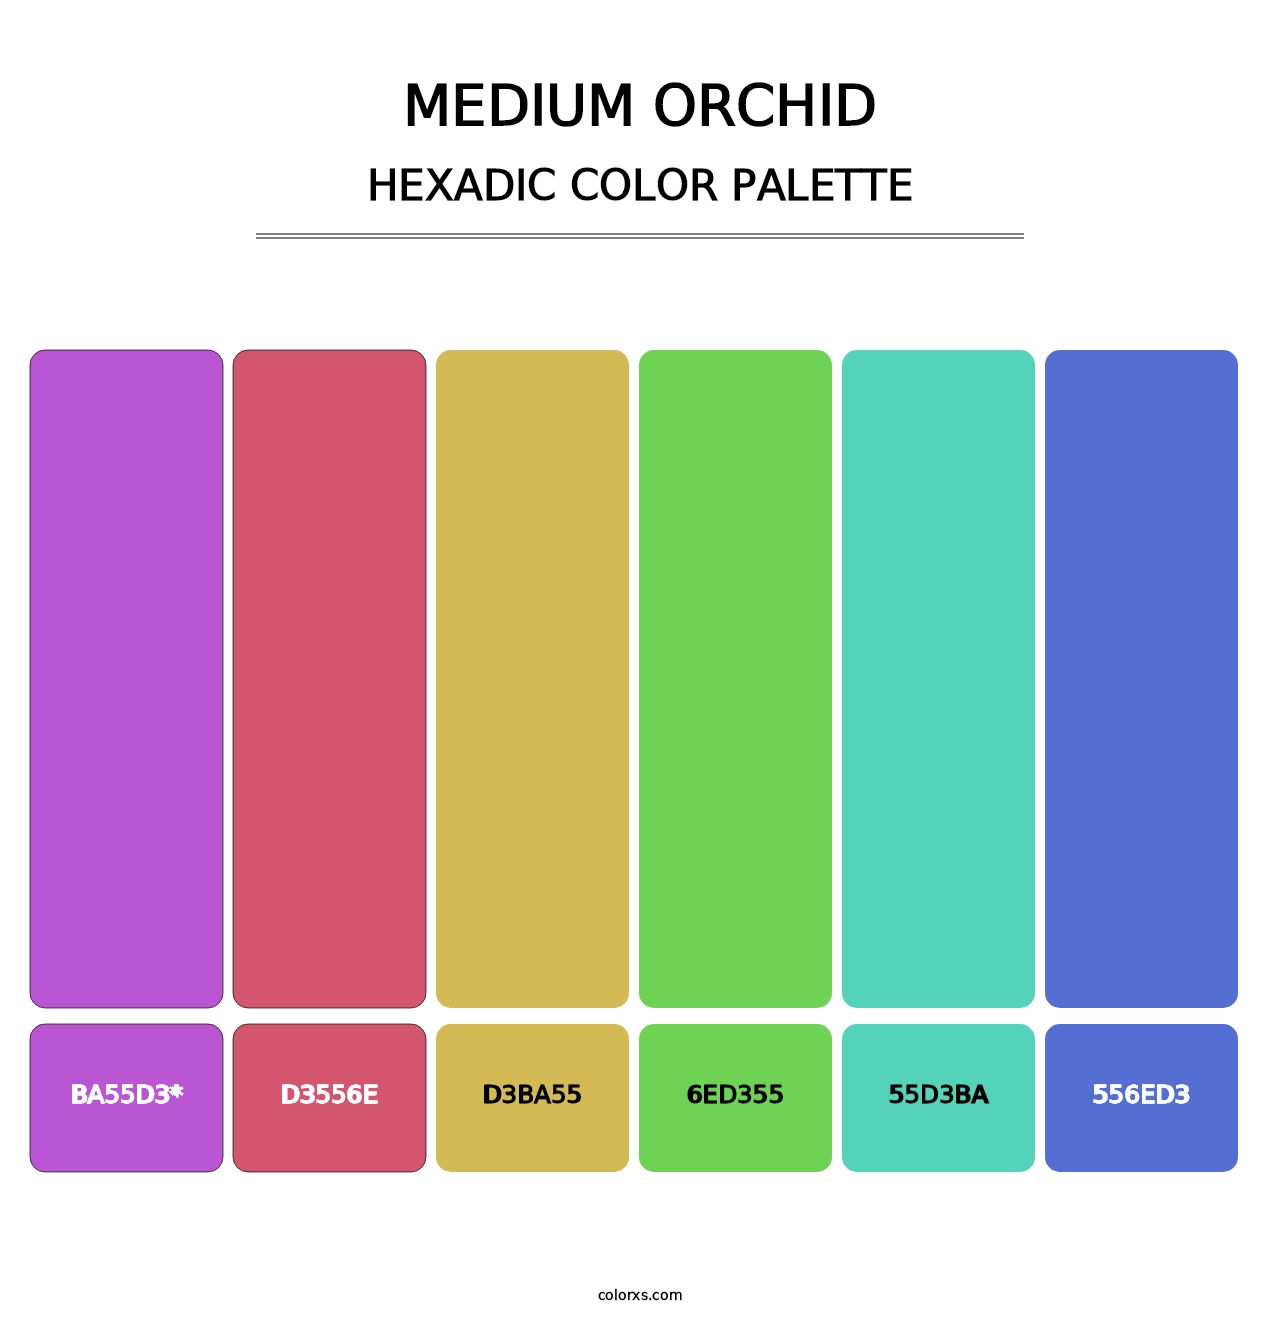 Medium Orchid - Hexadic Color Palette